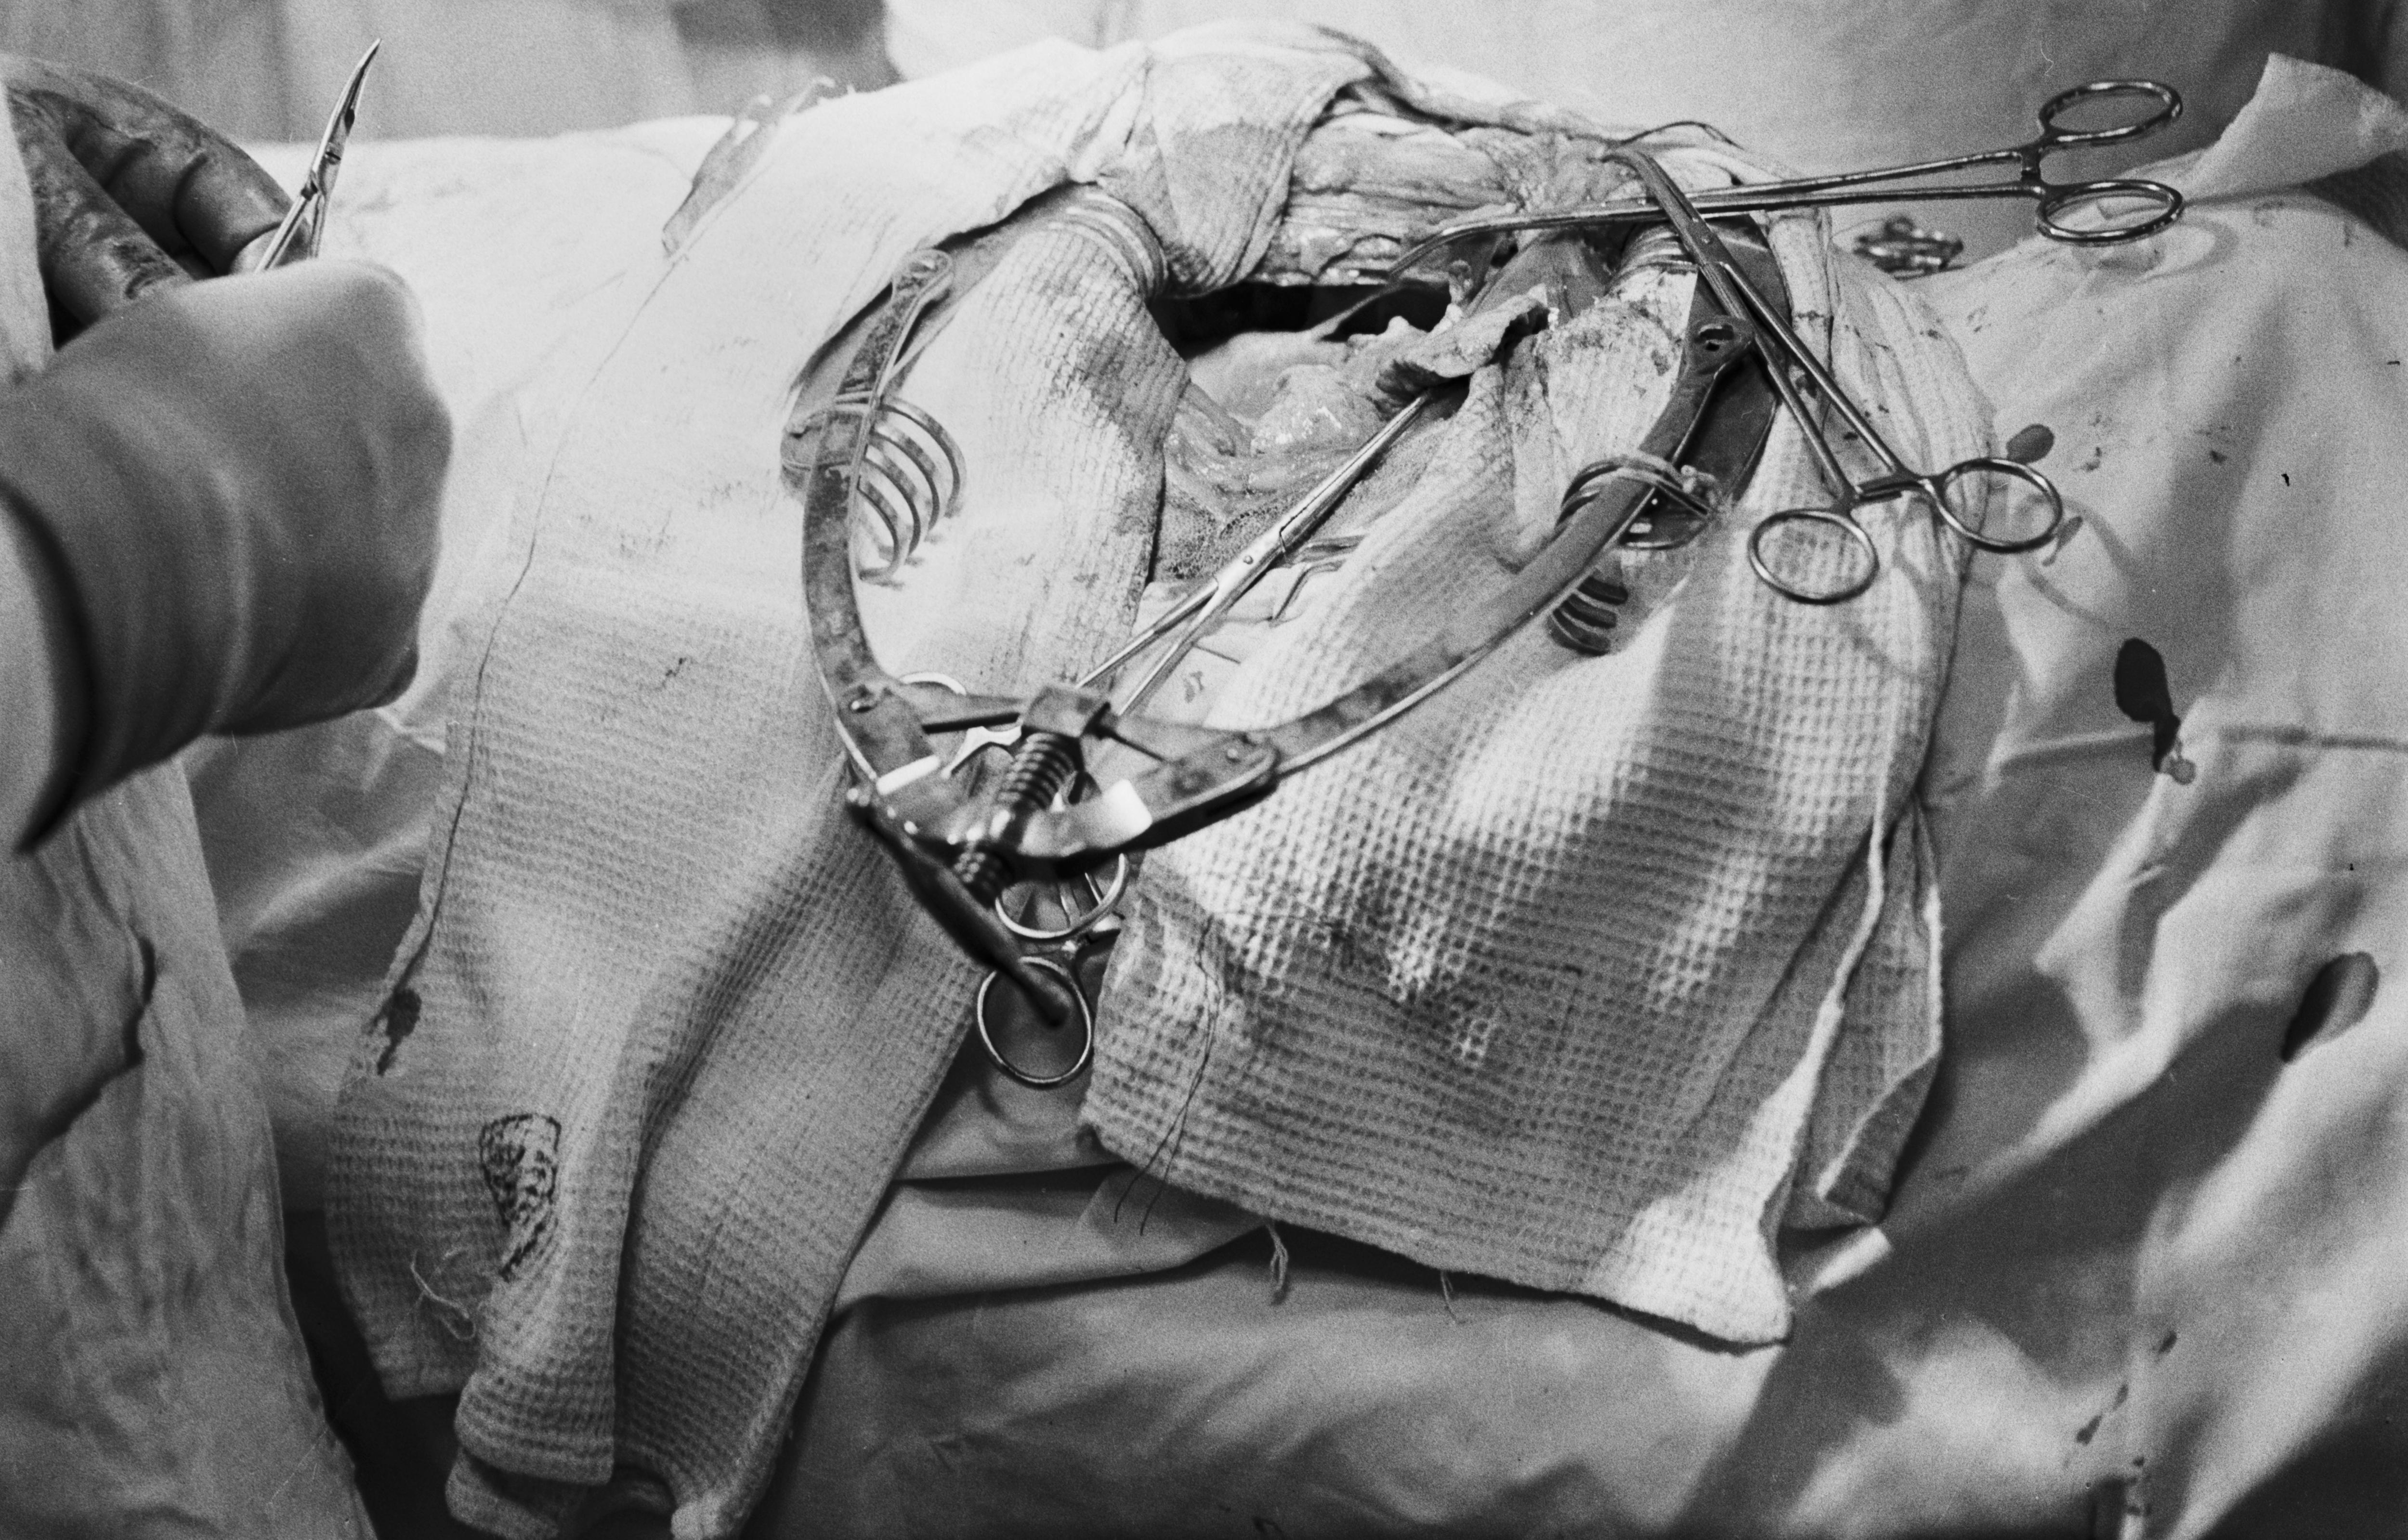 Демихов подготовил грудную полость собаки для пересадки второго сердца. Фото © ТАСС / Носов Петр